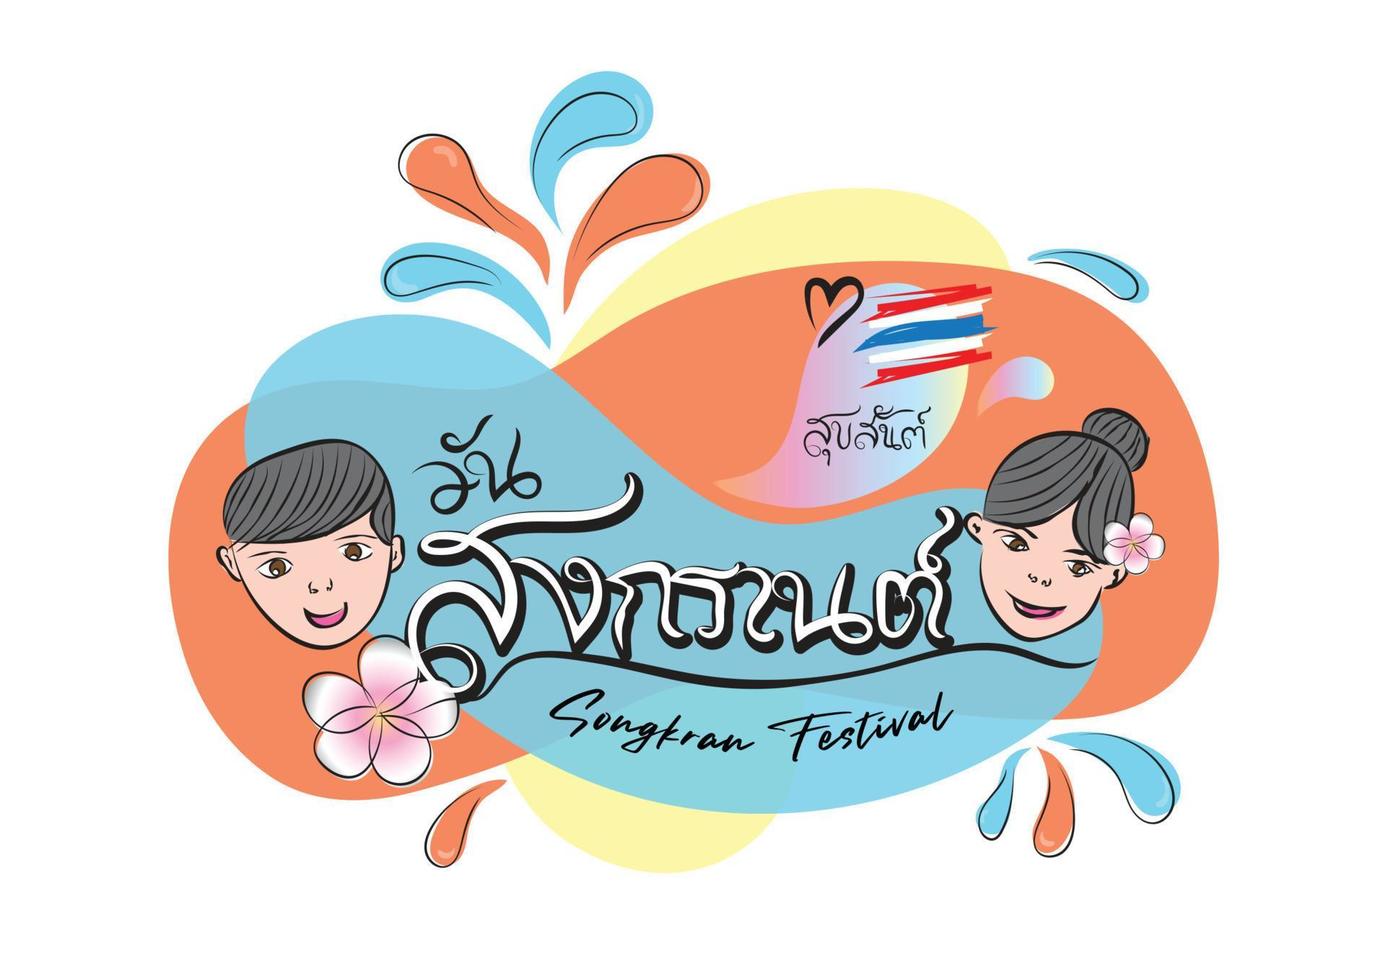 Songkran Festival water party icon vector template, cartoon illustration